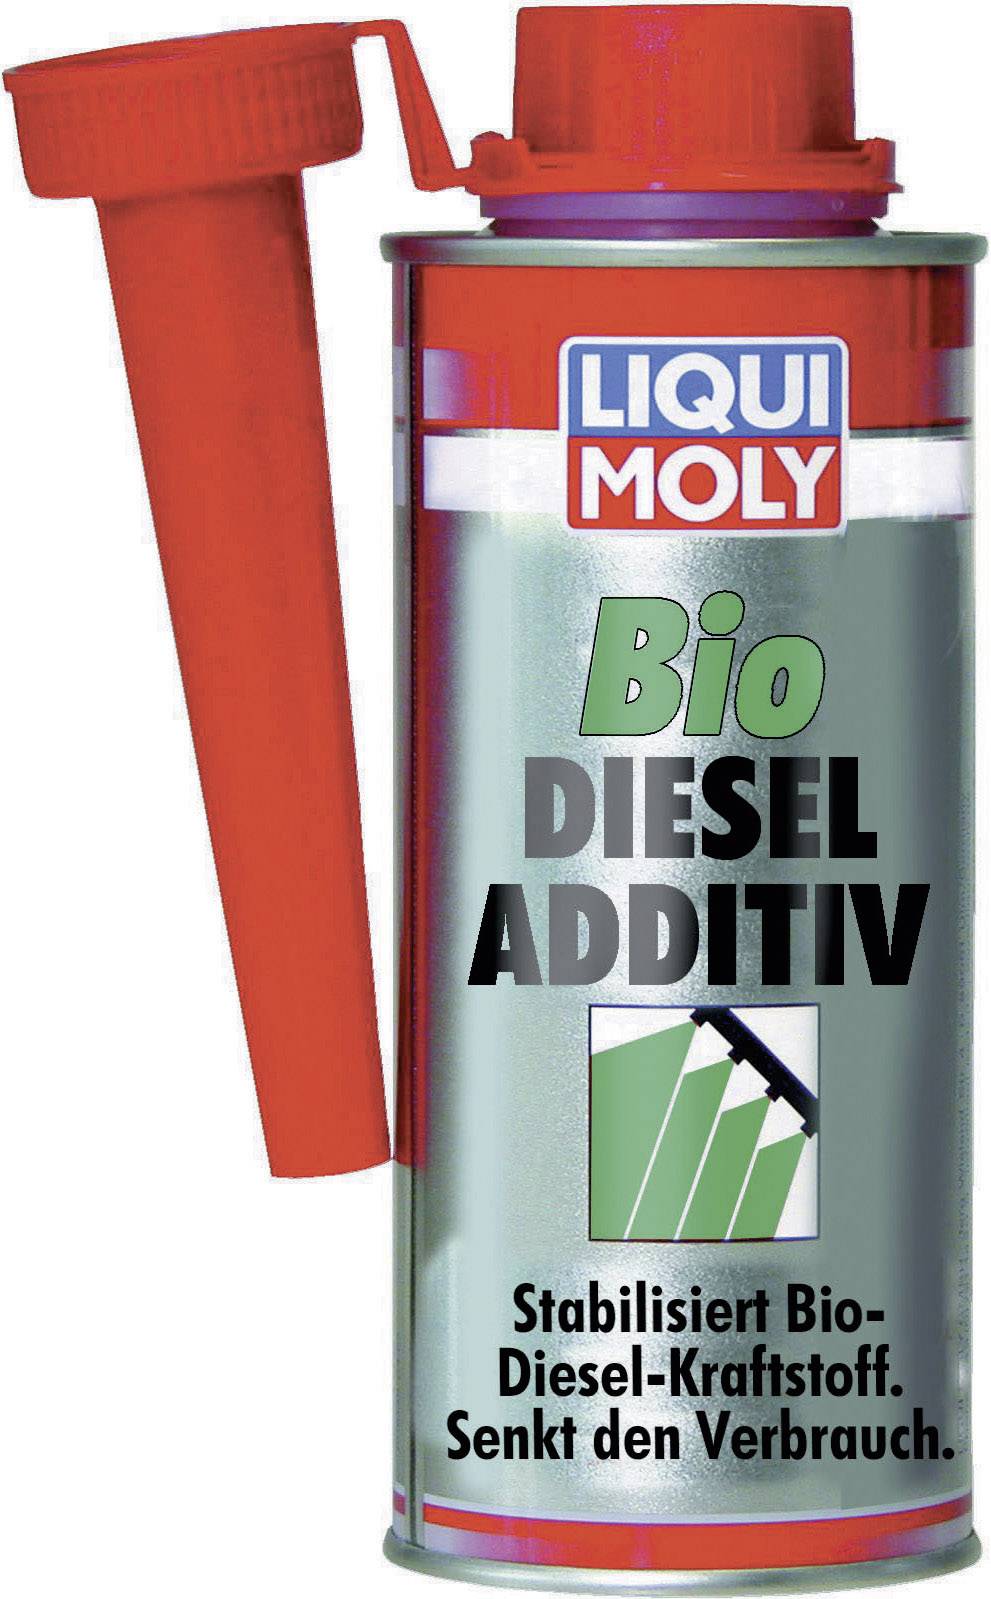 LIQUI MOLY Bio Diesel Additiv 250 ml